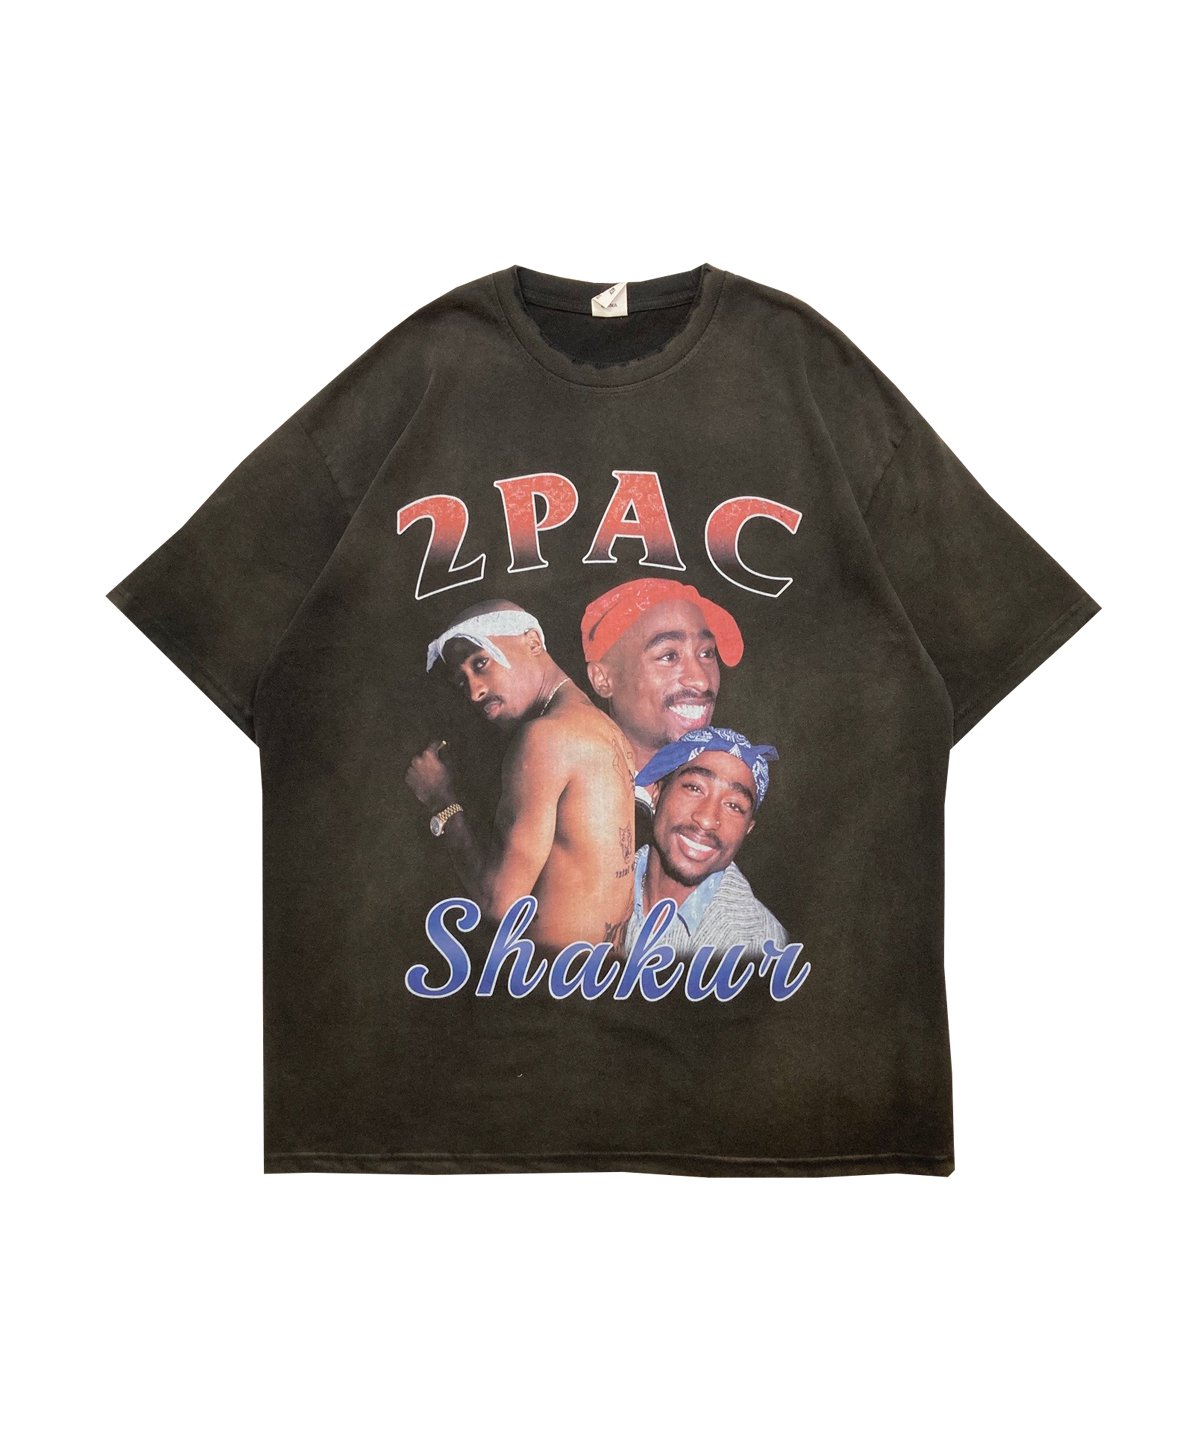 USA Select】 2PAC OVERSIZE Vintage T-Shirts.5